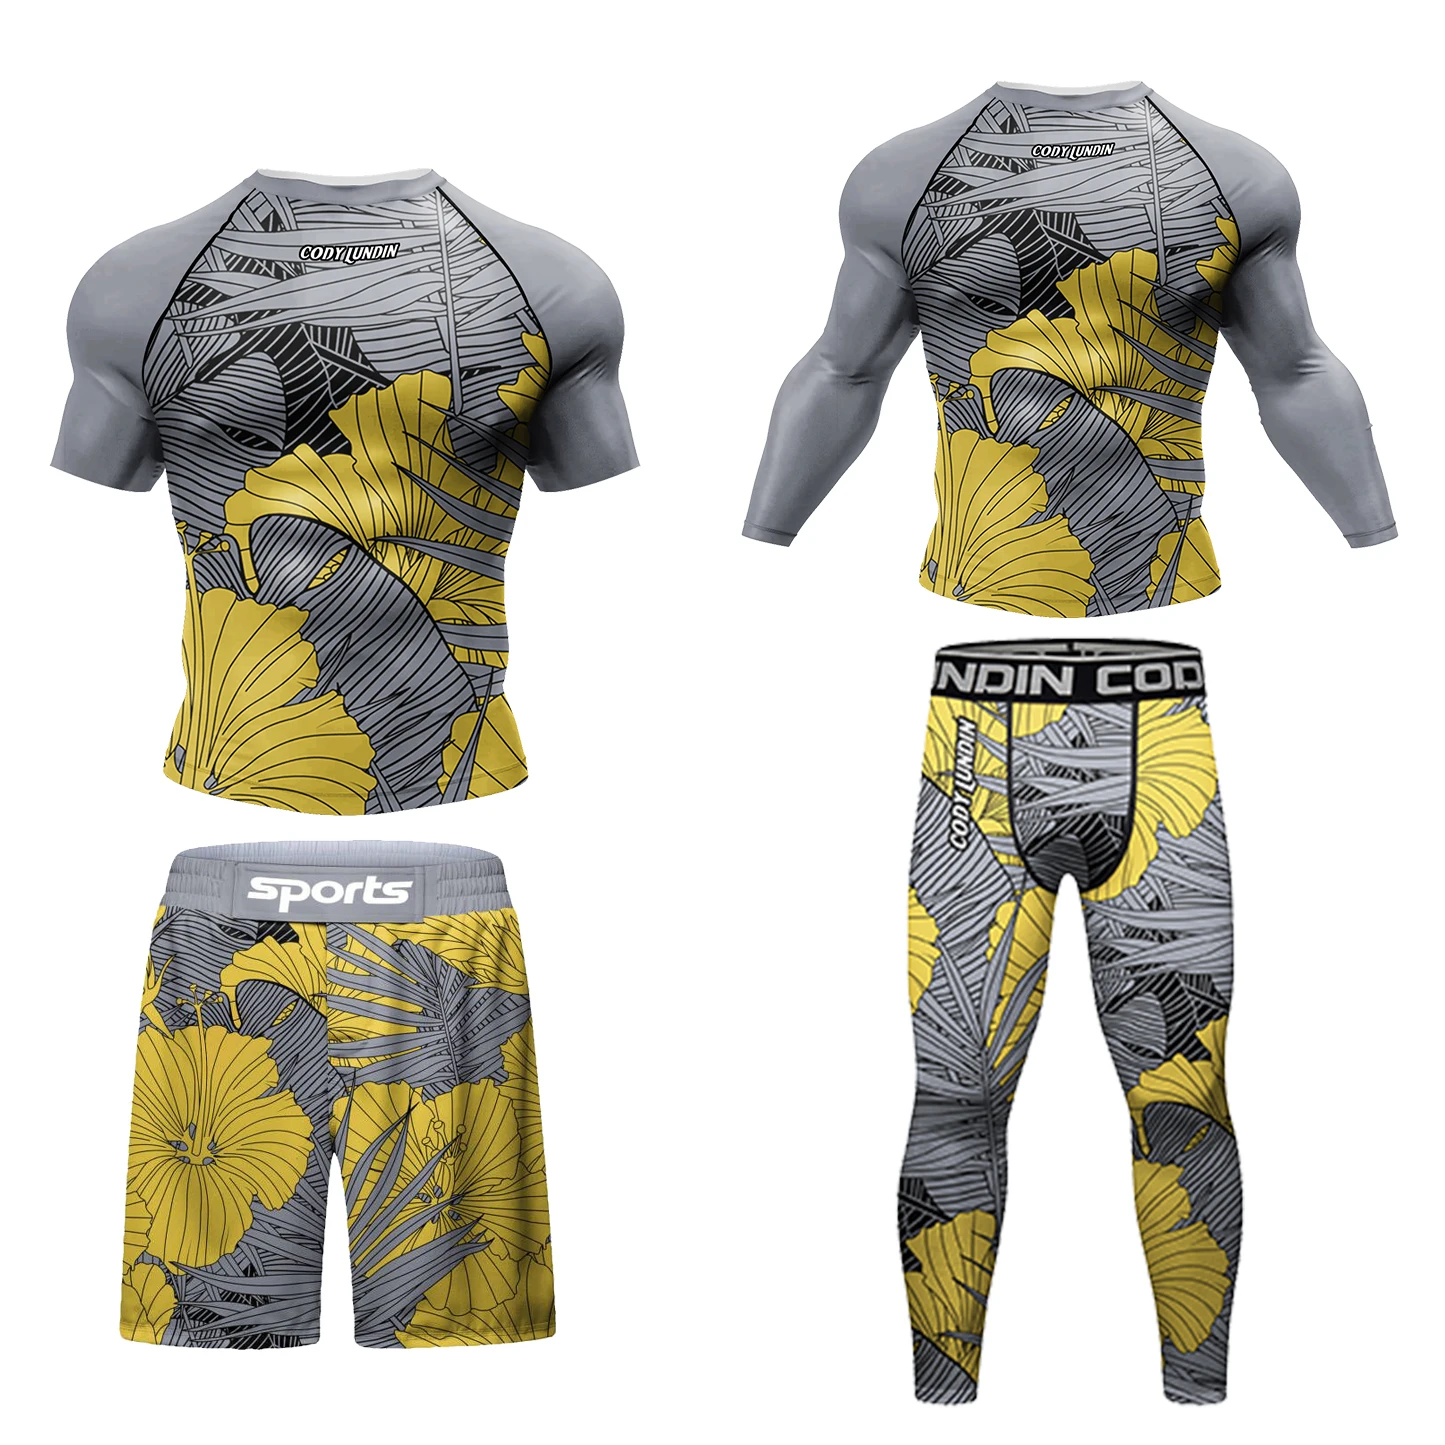 

Cody Lundin Manto MMA Brazilian Jiu Jitsu Kimono T-shirts Thai Boxing Shorts Stappling Pants Rashguard Men's Set with Logo